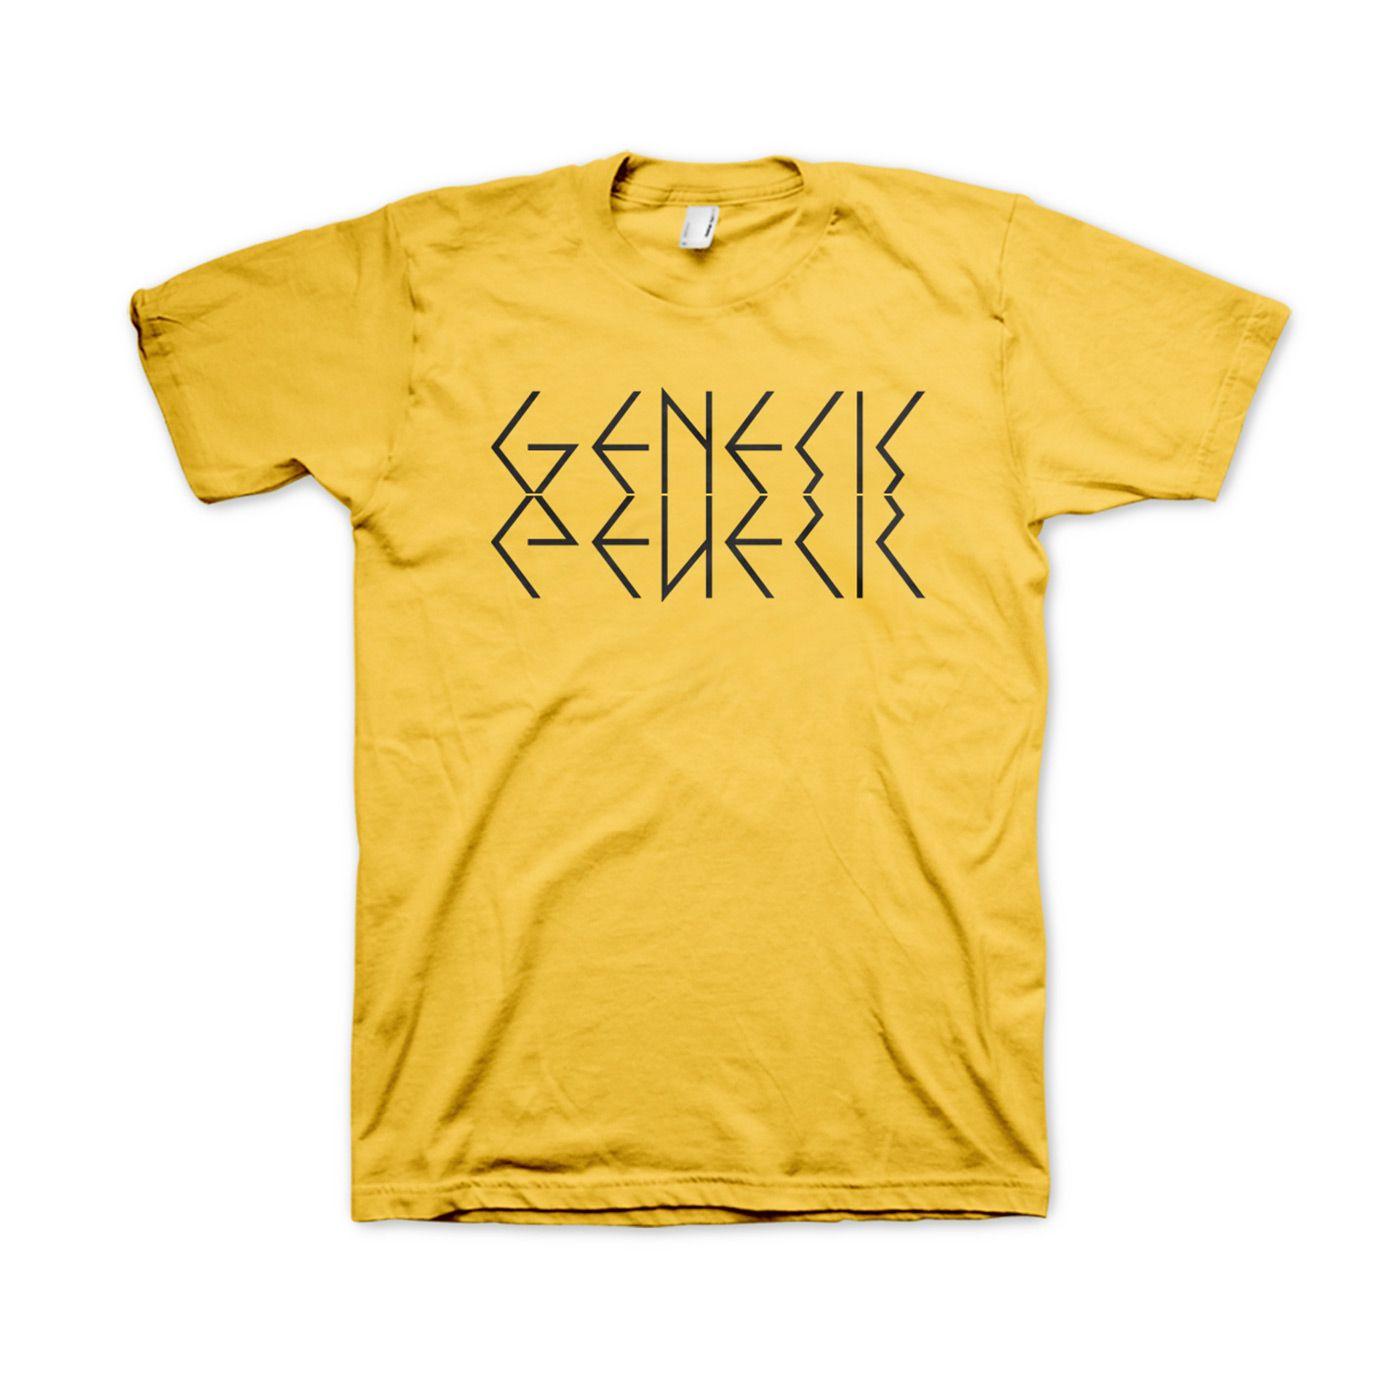 Genesis Band Logo - Genesis | Official Merchandise Store